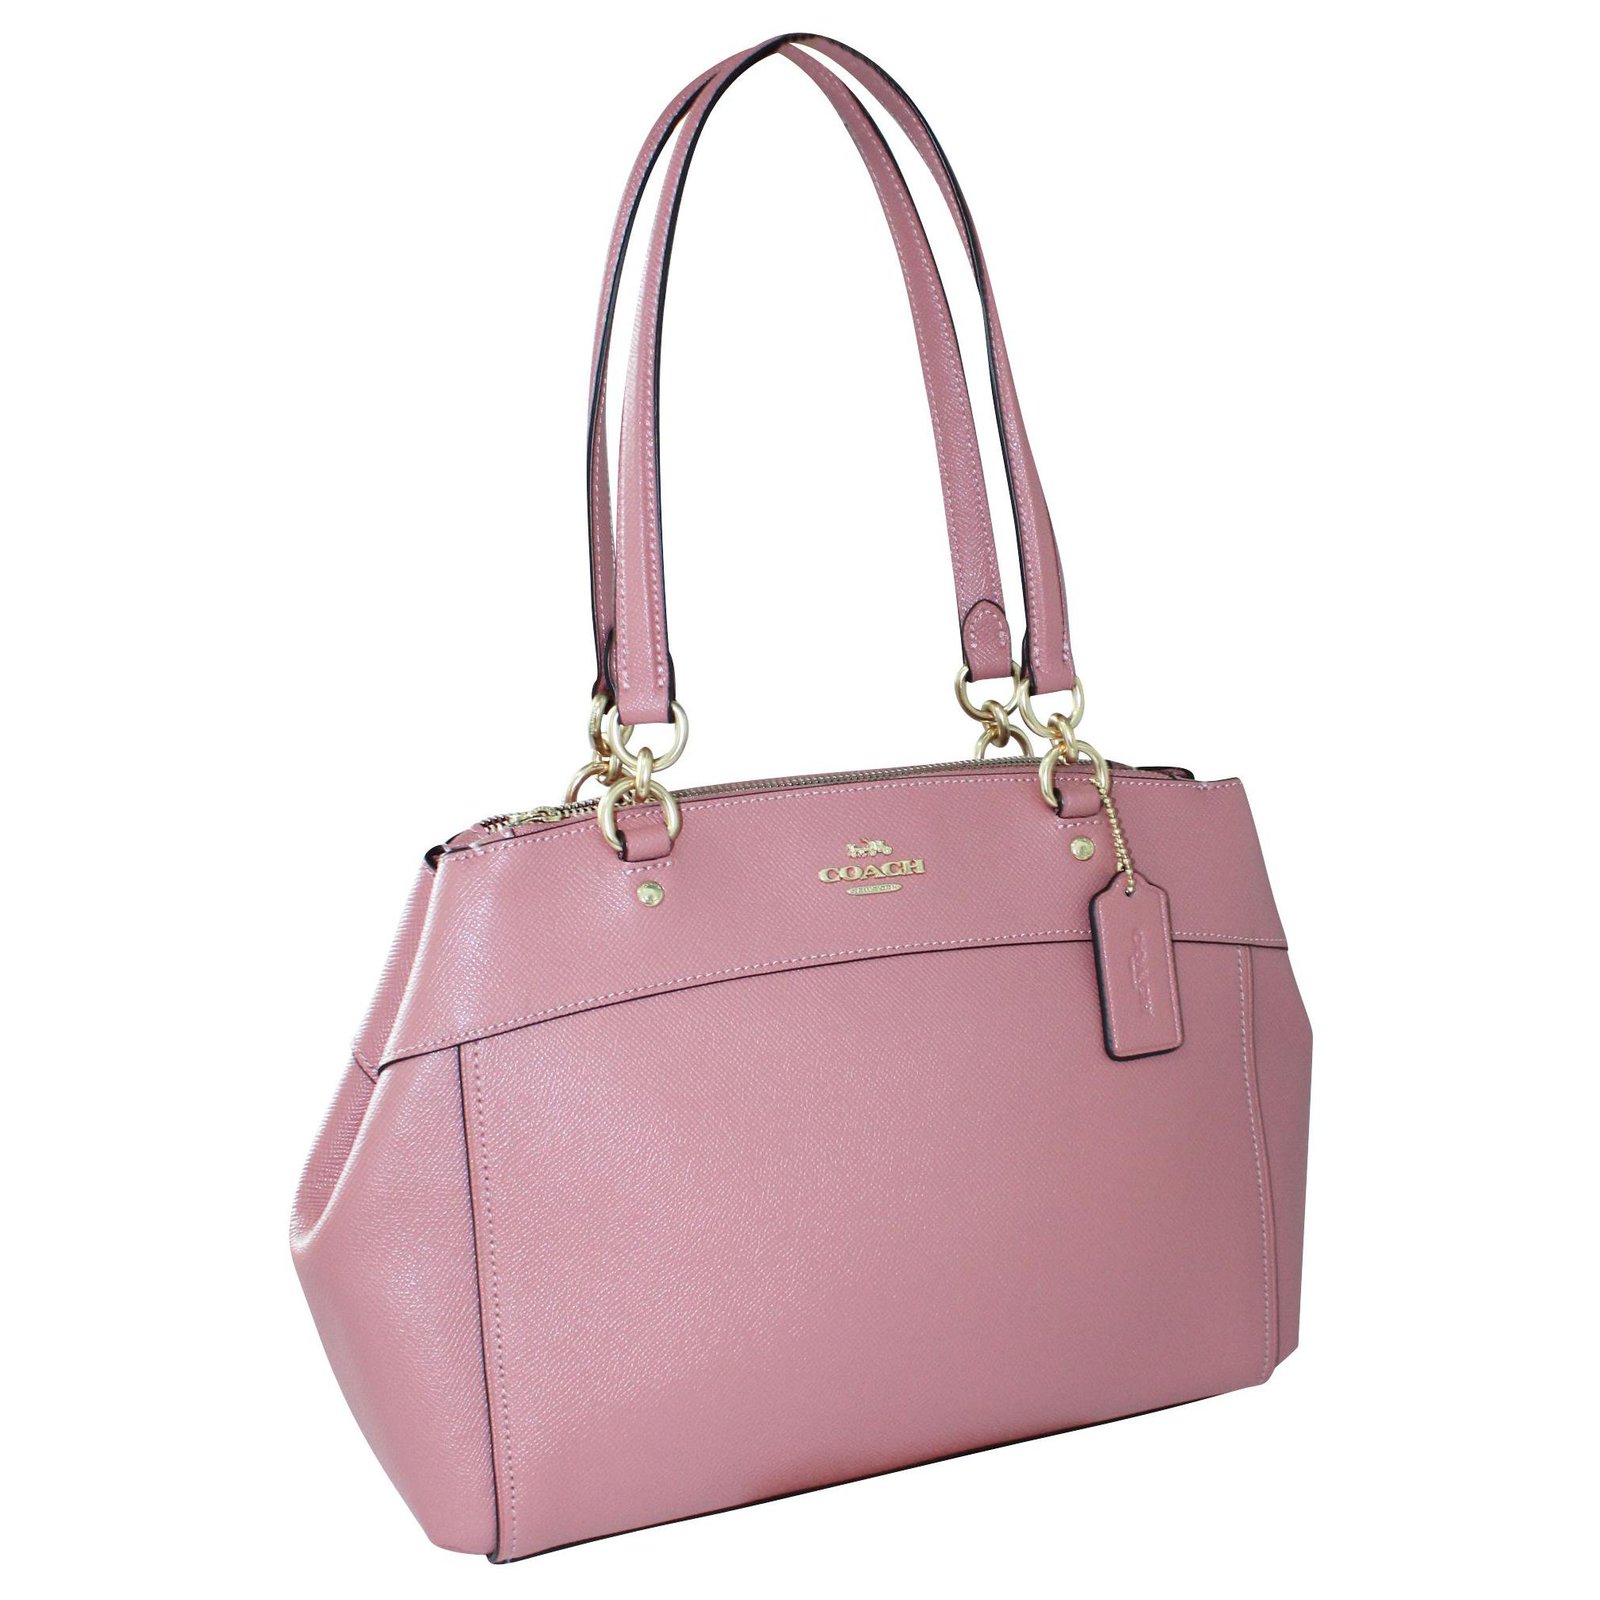 Vintage light pink Coach purse. In good vintage